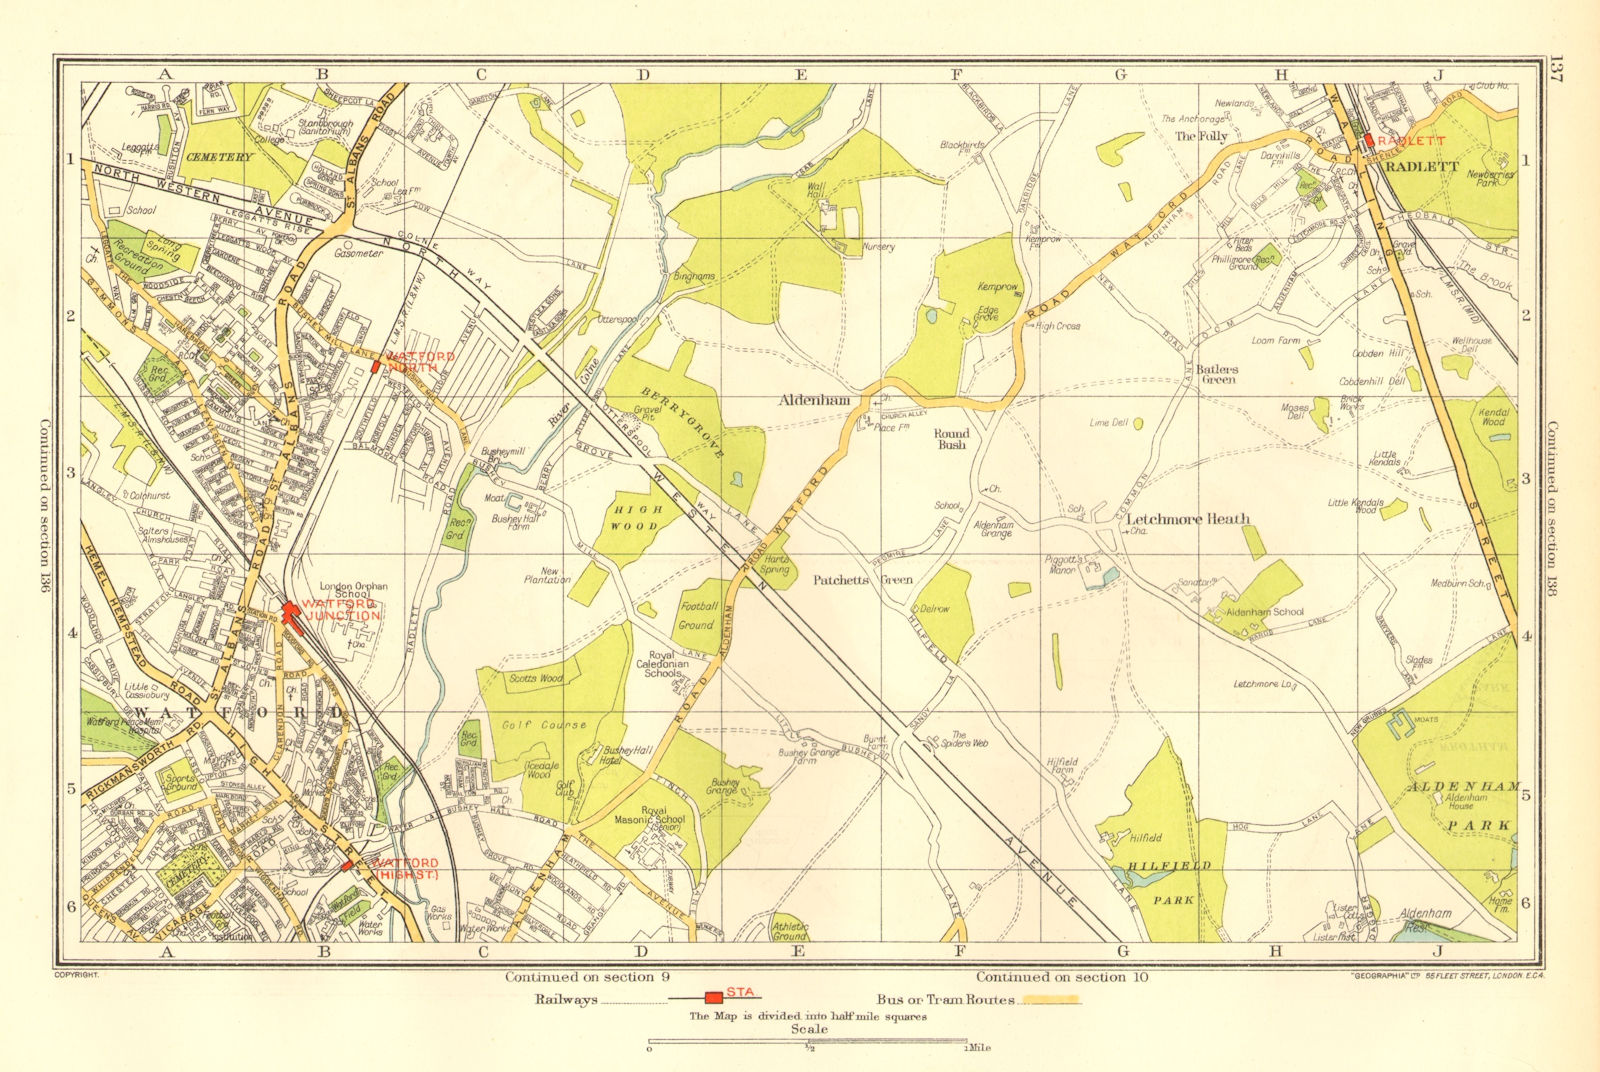 WATFORD. Letchmore Heath Radlett Meriden Aldenham Patchetts Green 1937 old map